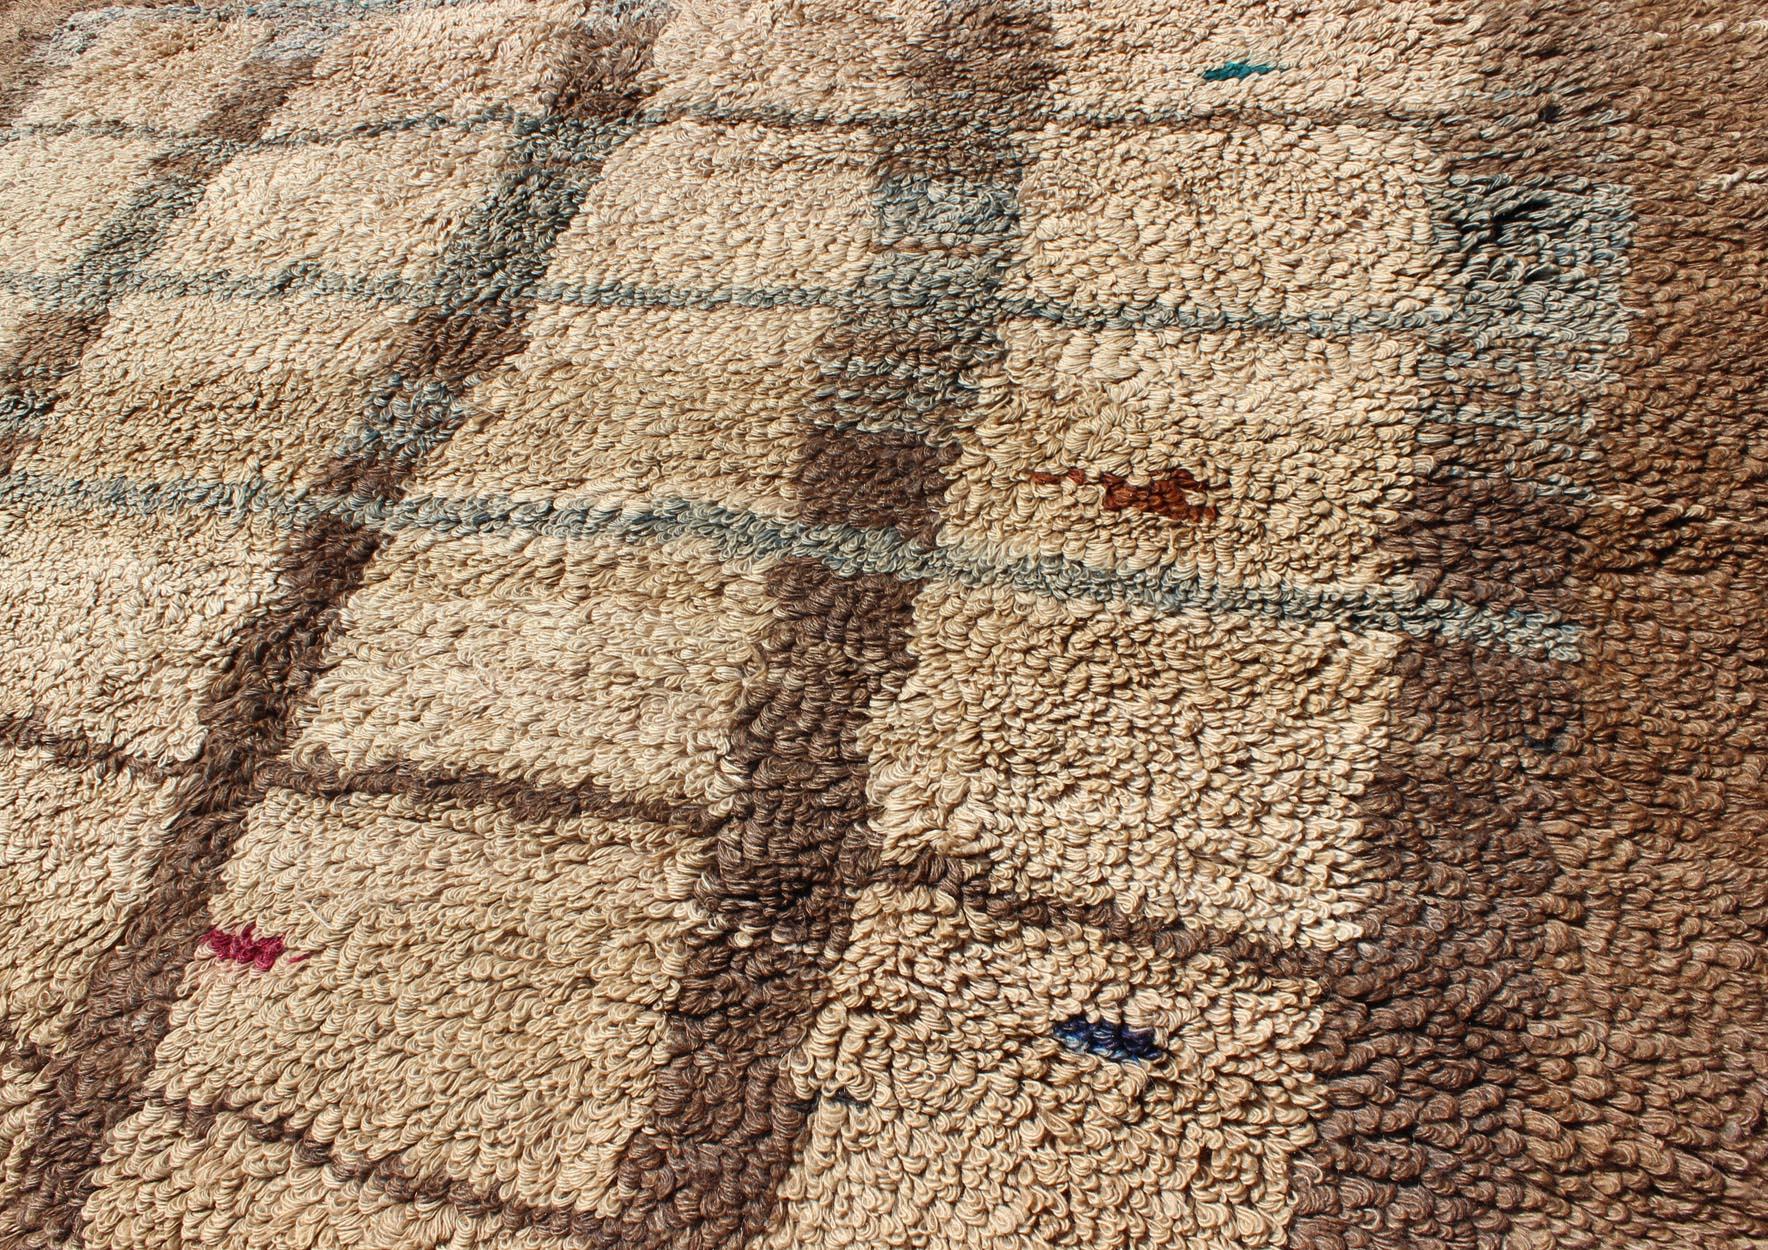 Turkish vintage Tulu rug with modern simple square design in tan and brown. Keivan Woven Arts / rug EN-140524, country of origin / type: Turkey / Tulu, circa mid-20th century.

Measures: 5'1 x 5'2

This vintage Tulu rug from Turkey (circa